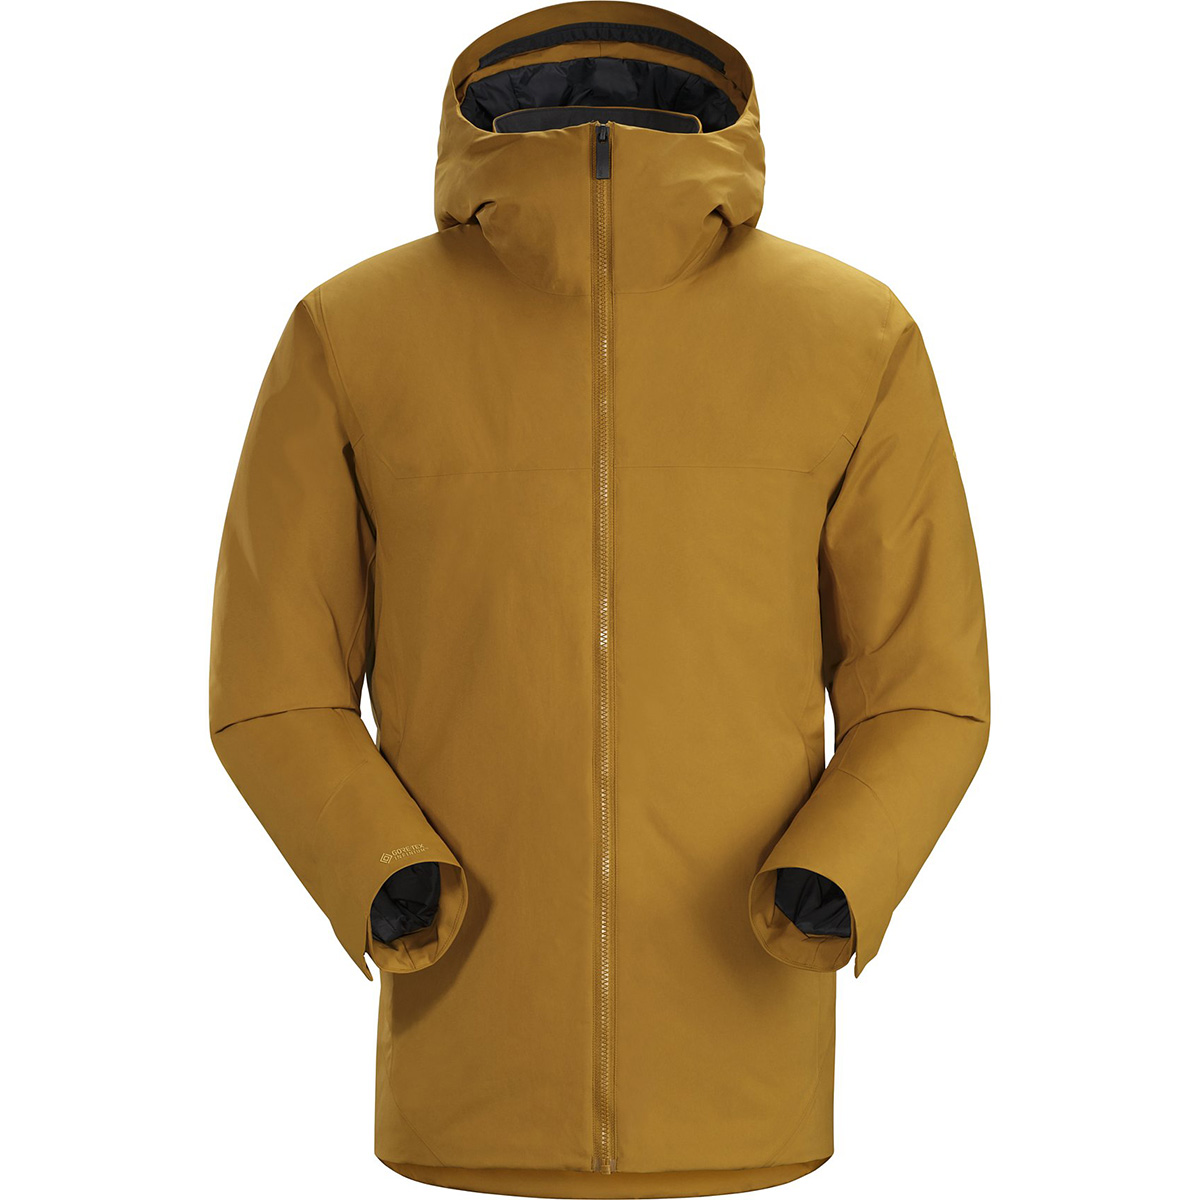 Arc'teryx Koda Jacket men's, discontinued Fall 2019 model (free ground ...